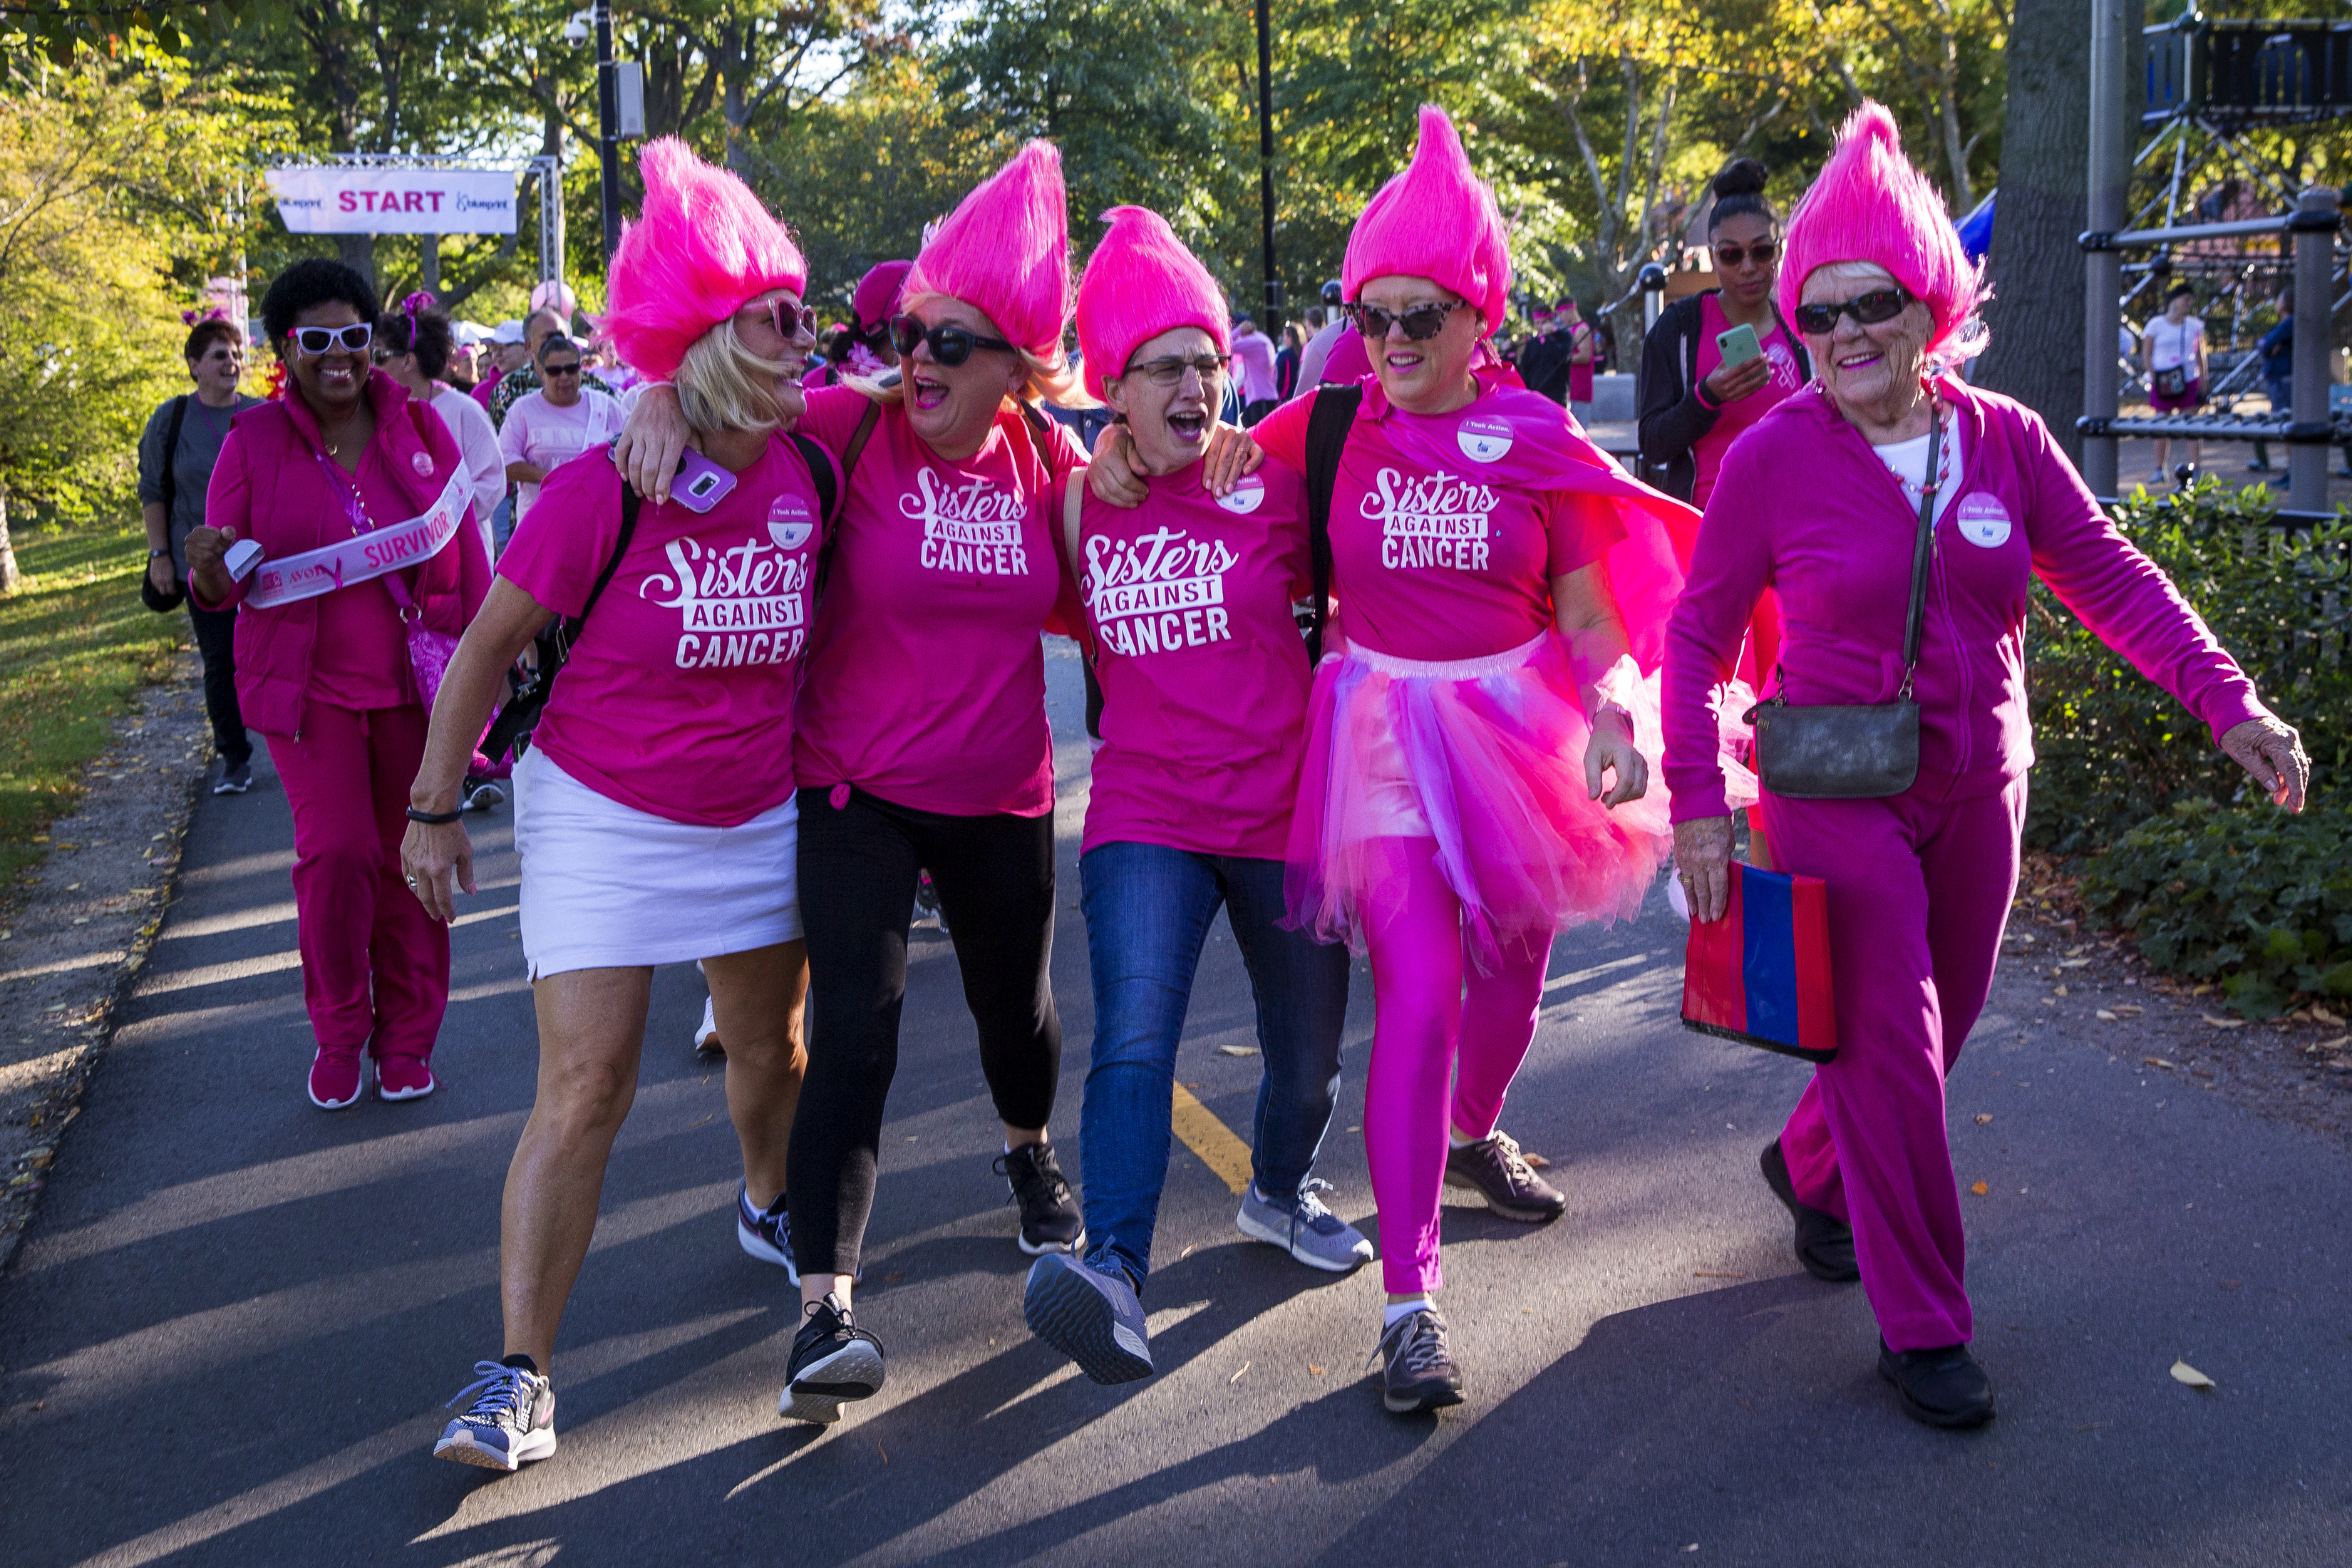 cancer against boston strides making breast